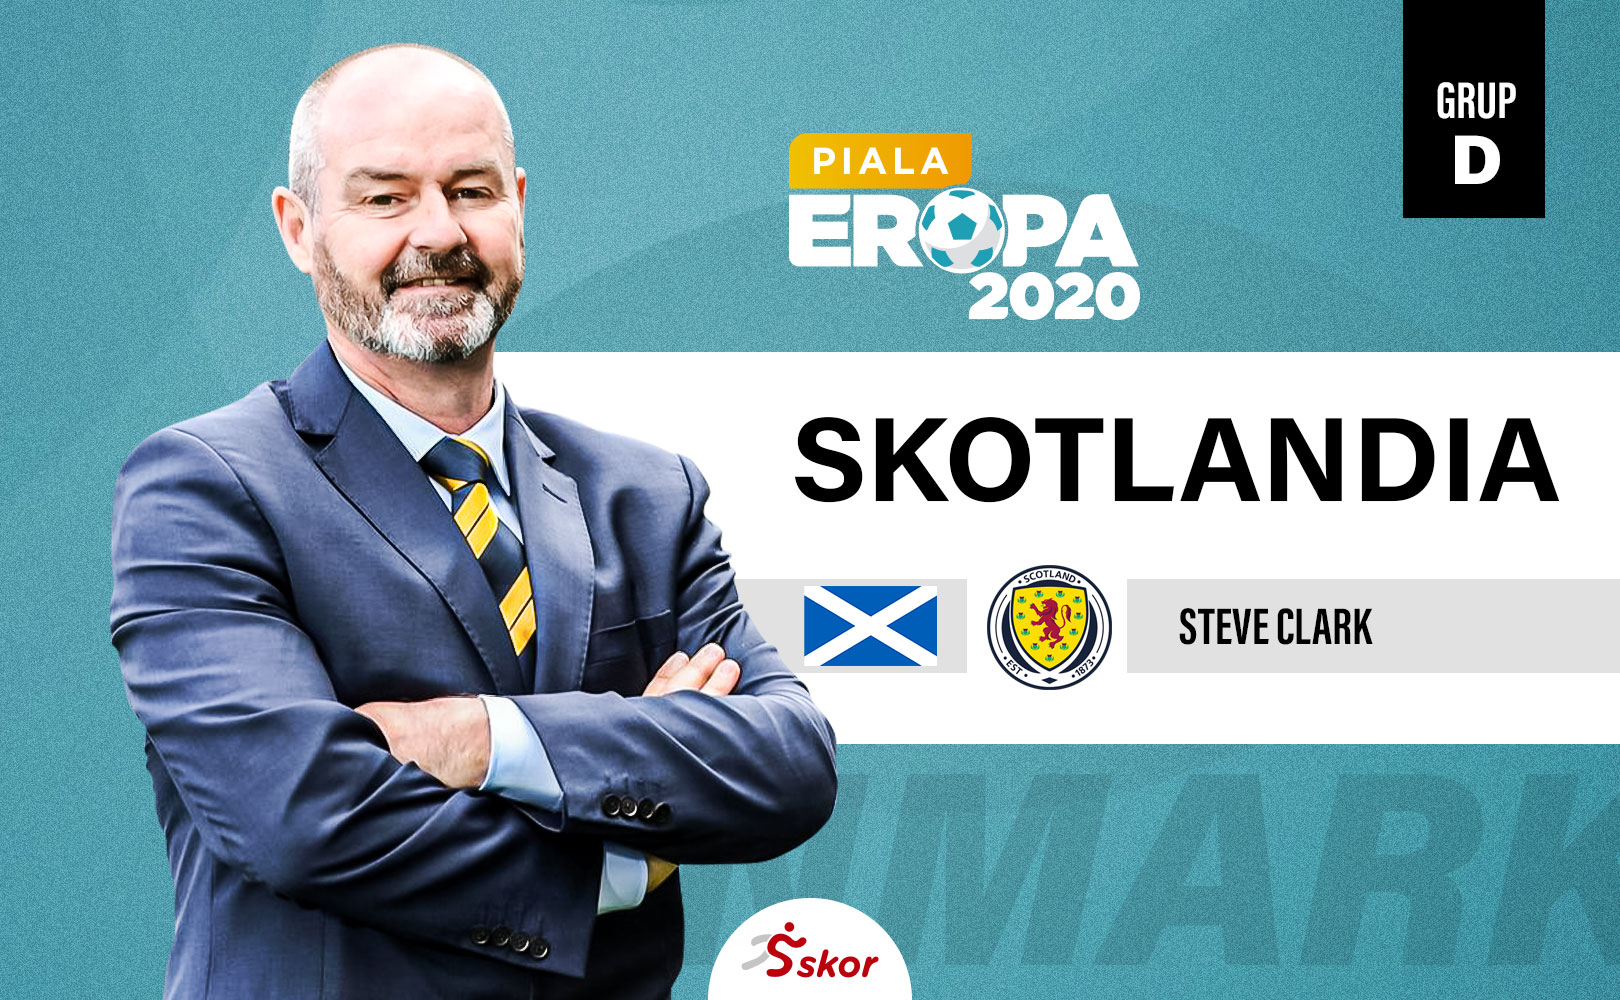 Profil Tim Piala Eropa 2020 - Skotlandia: Sang Kuda Hitam Grup D